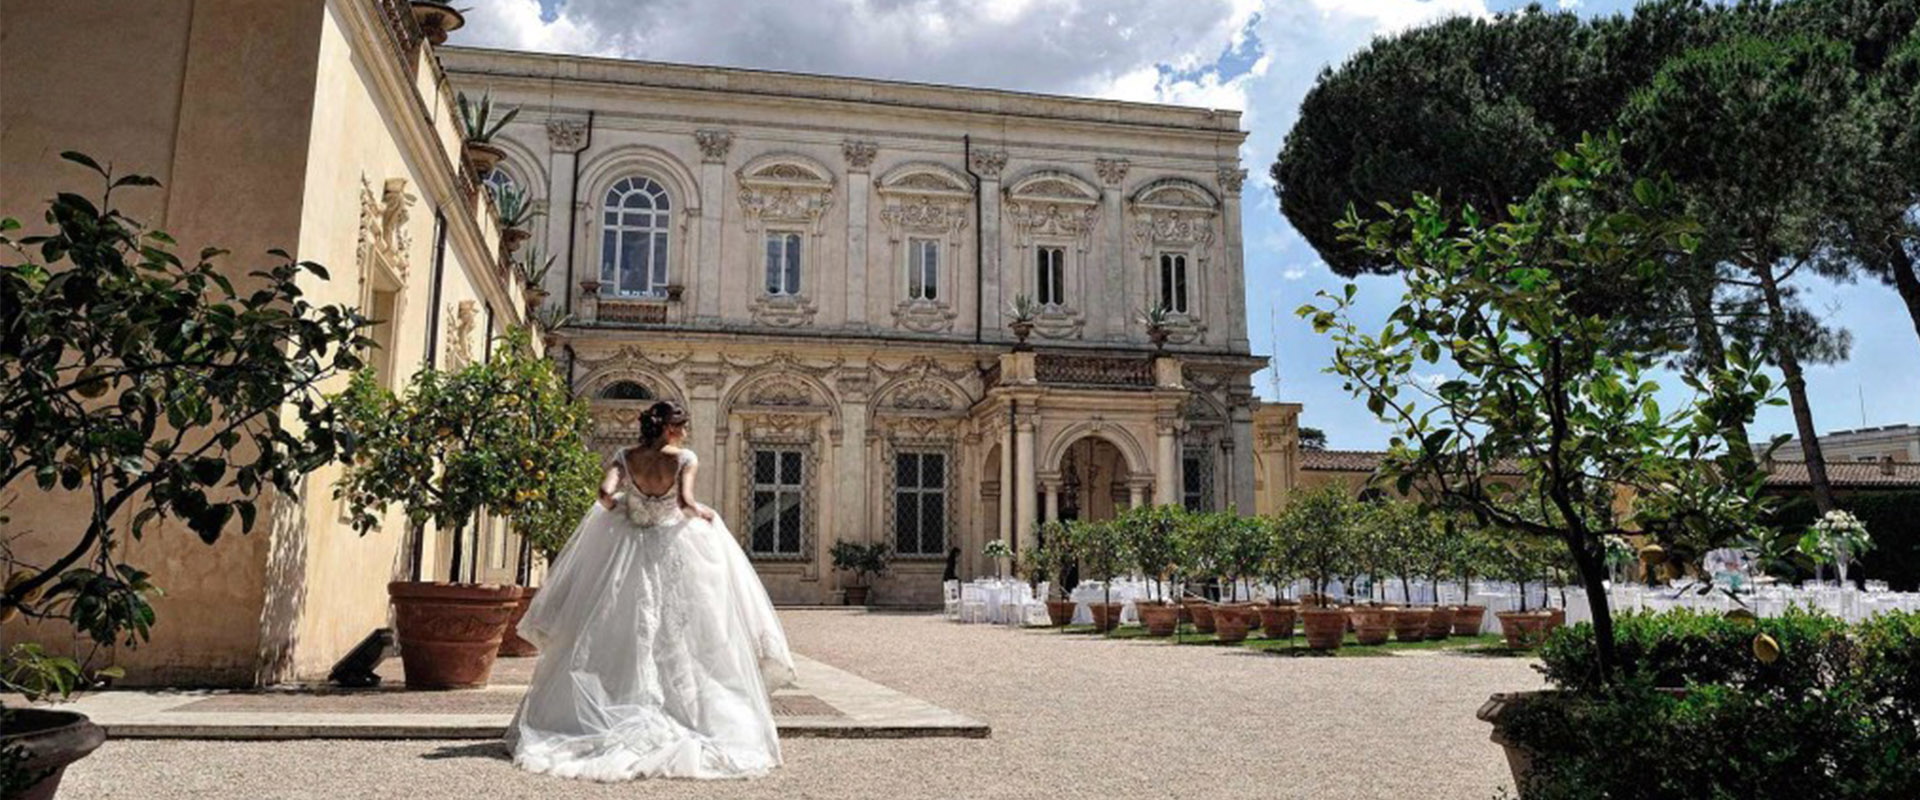 Mariage Rome lieu atypique location _BeyondRoma